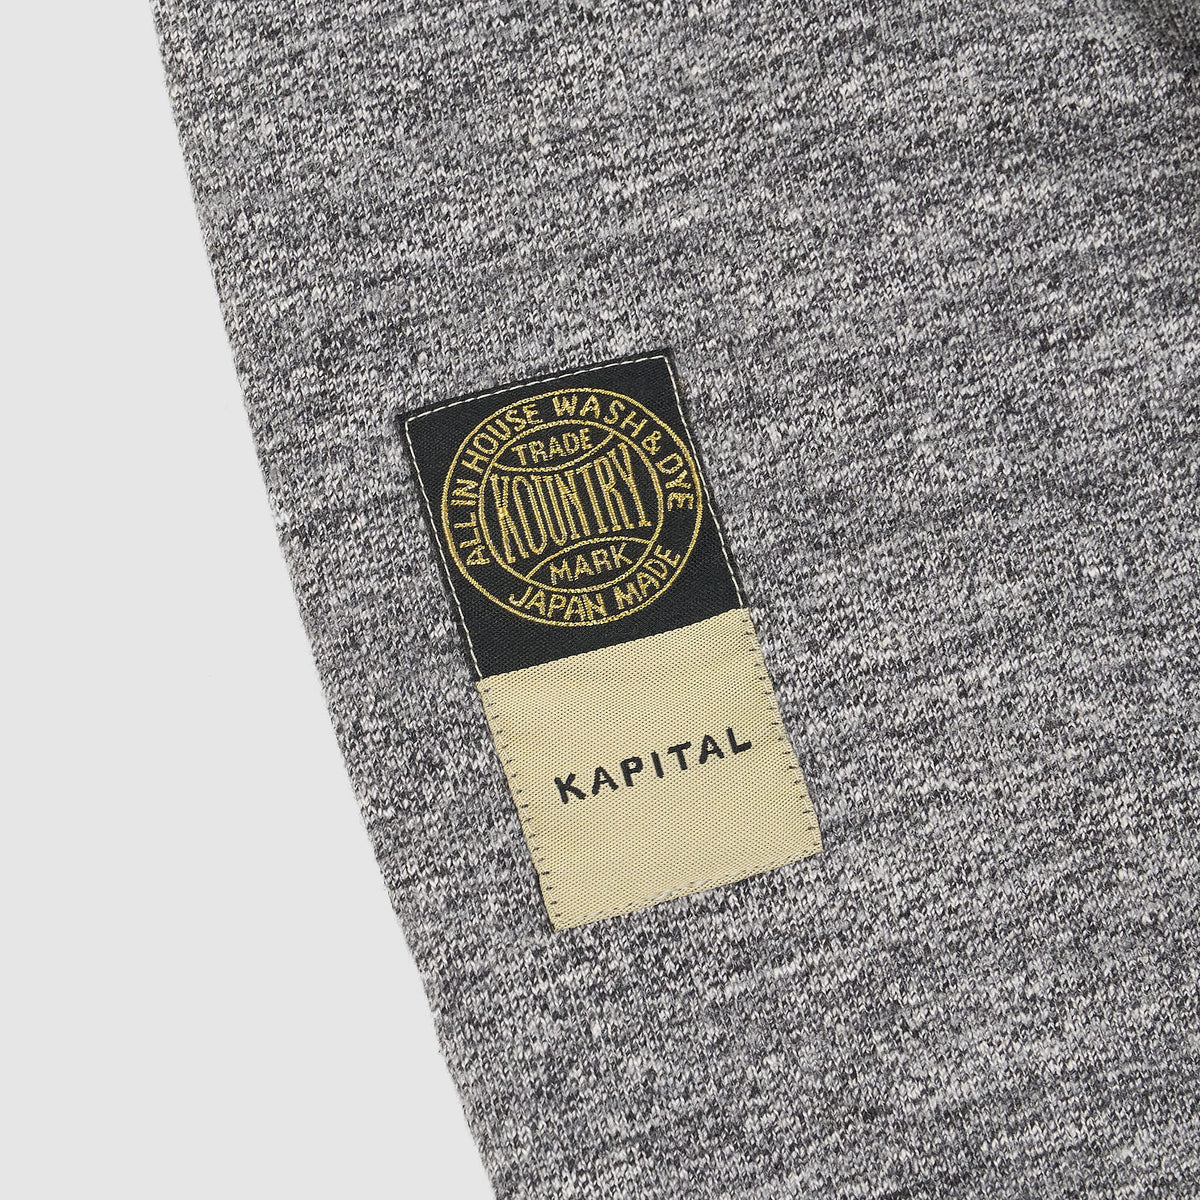 Kapital Kounty Jersey Knitted  Hard 47 Ball Sweatshirt